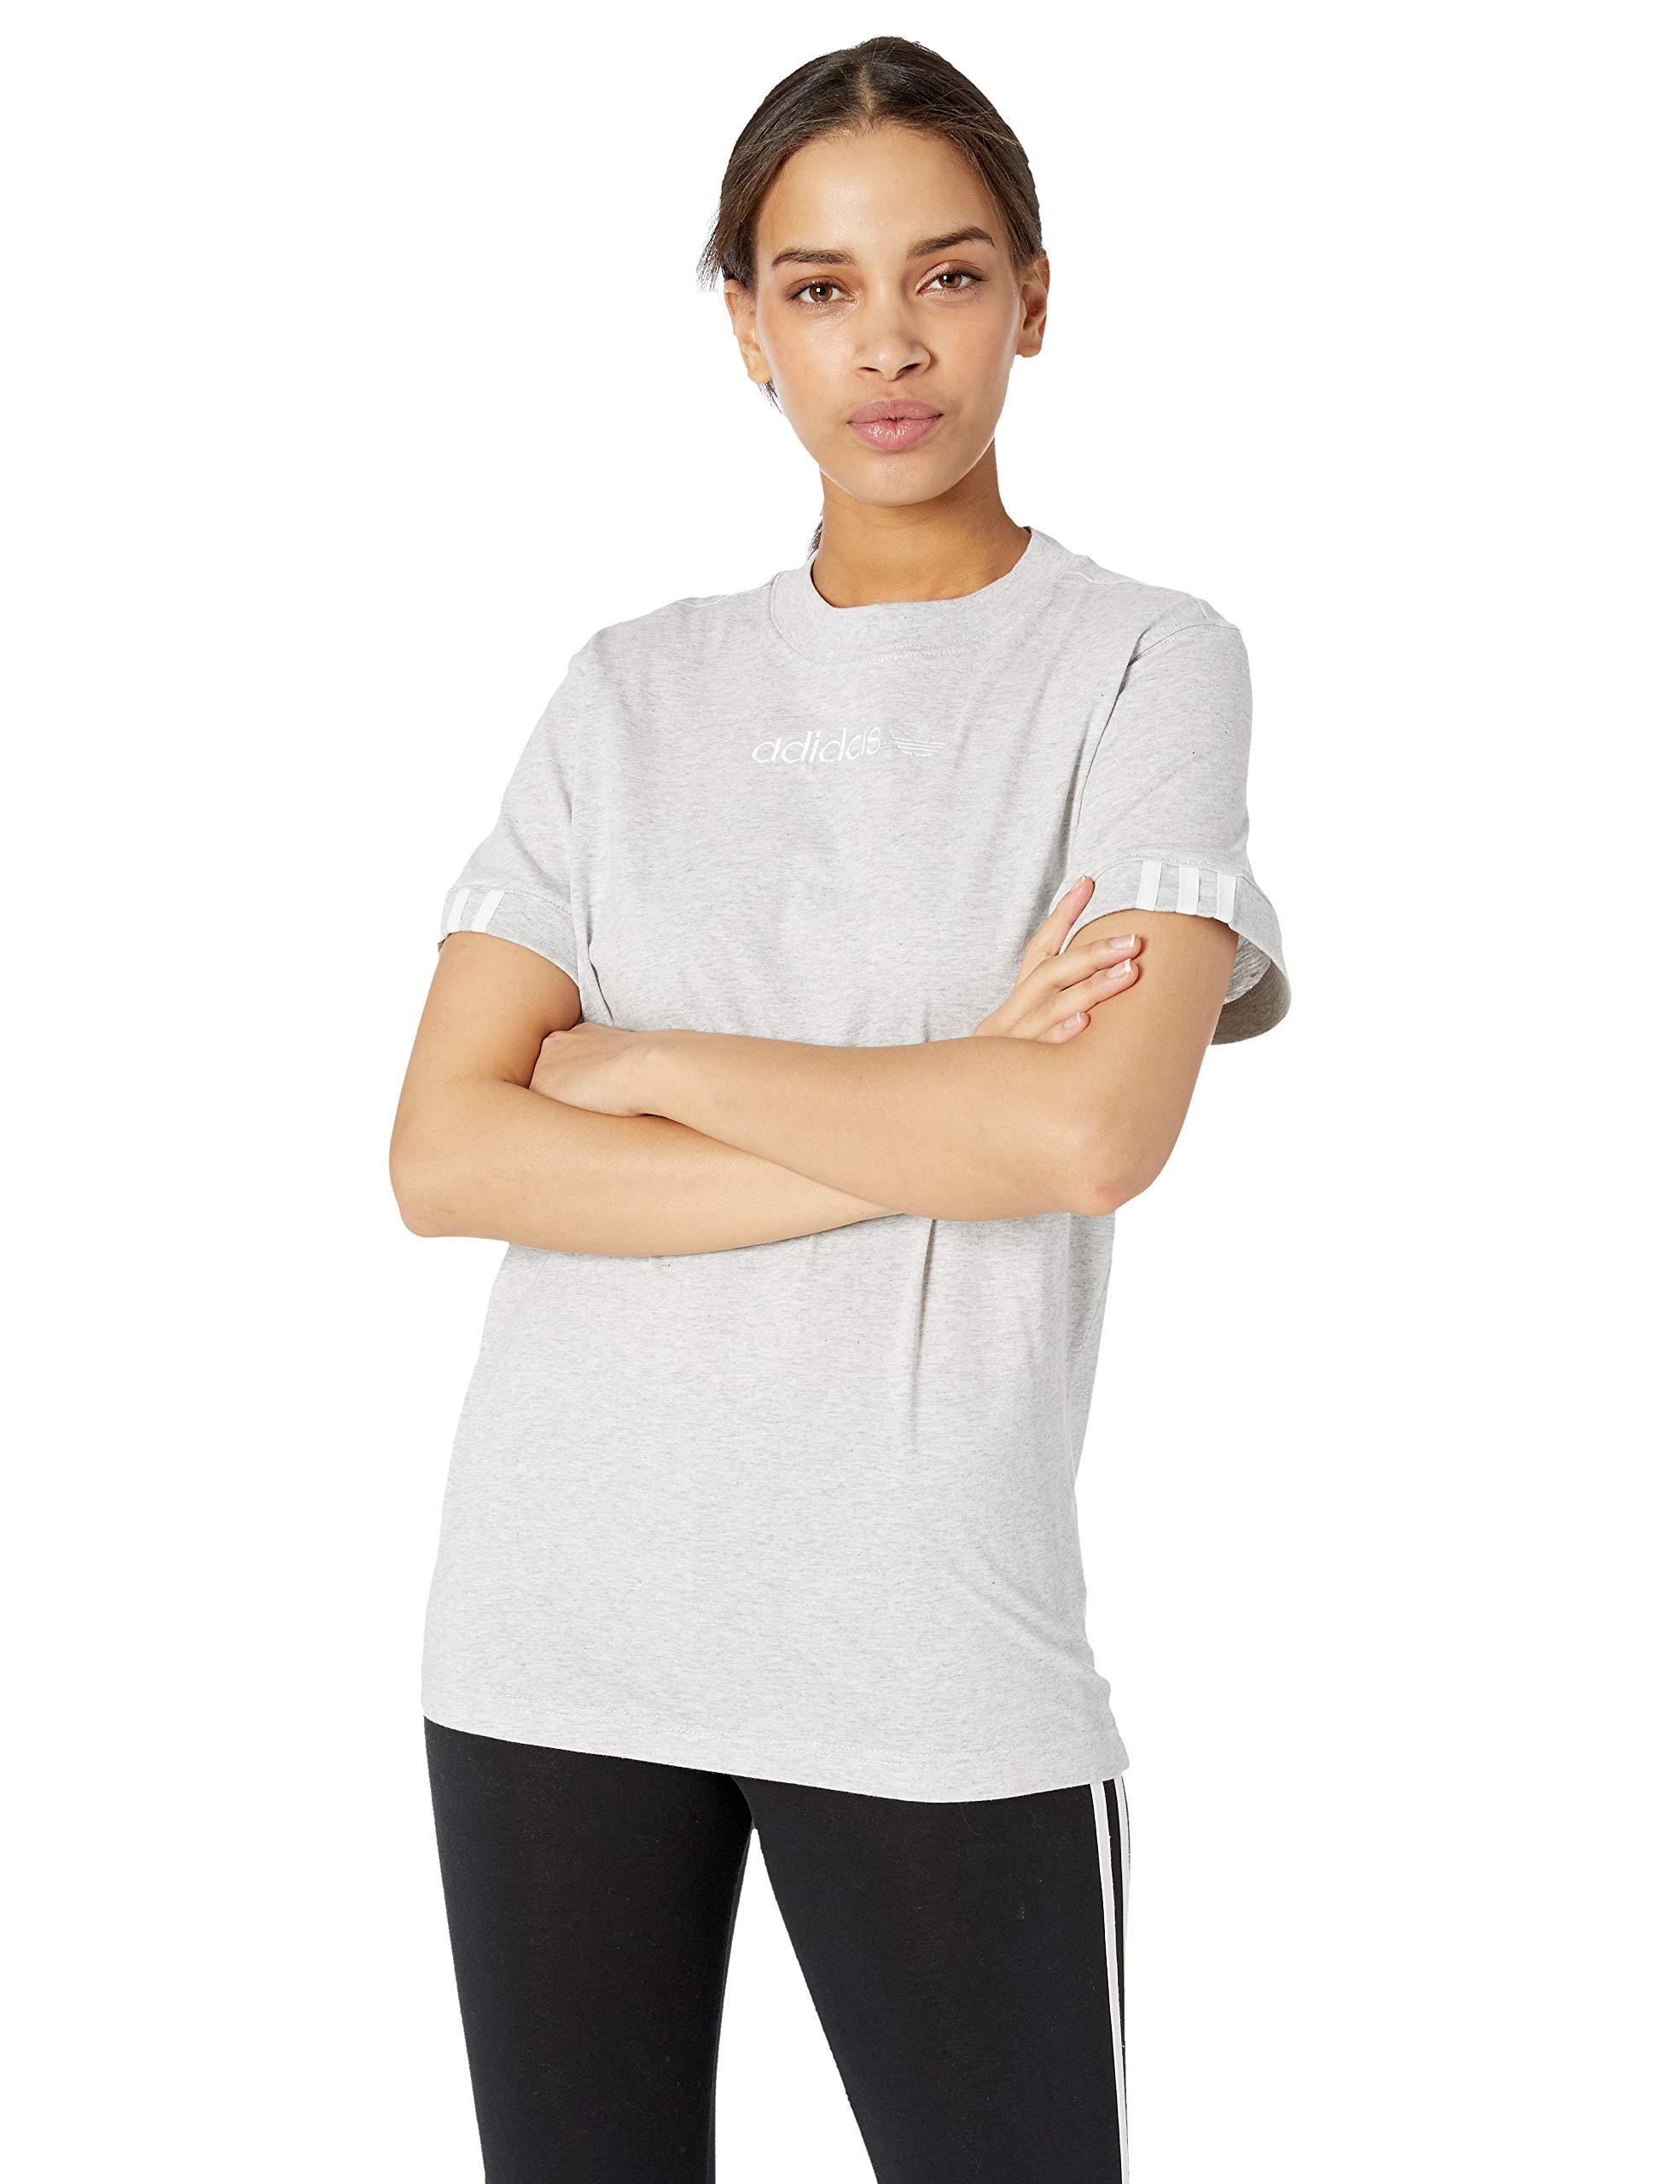 adidas Originals Cotton Coeeze T-shirt in Light Grey Heather (Gray) - Lyst